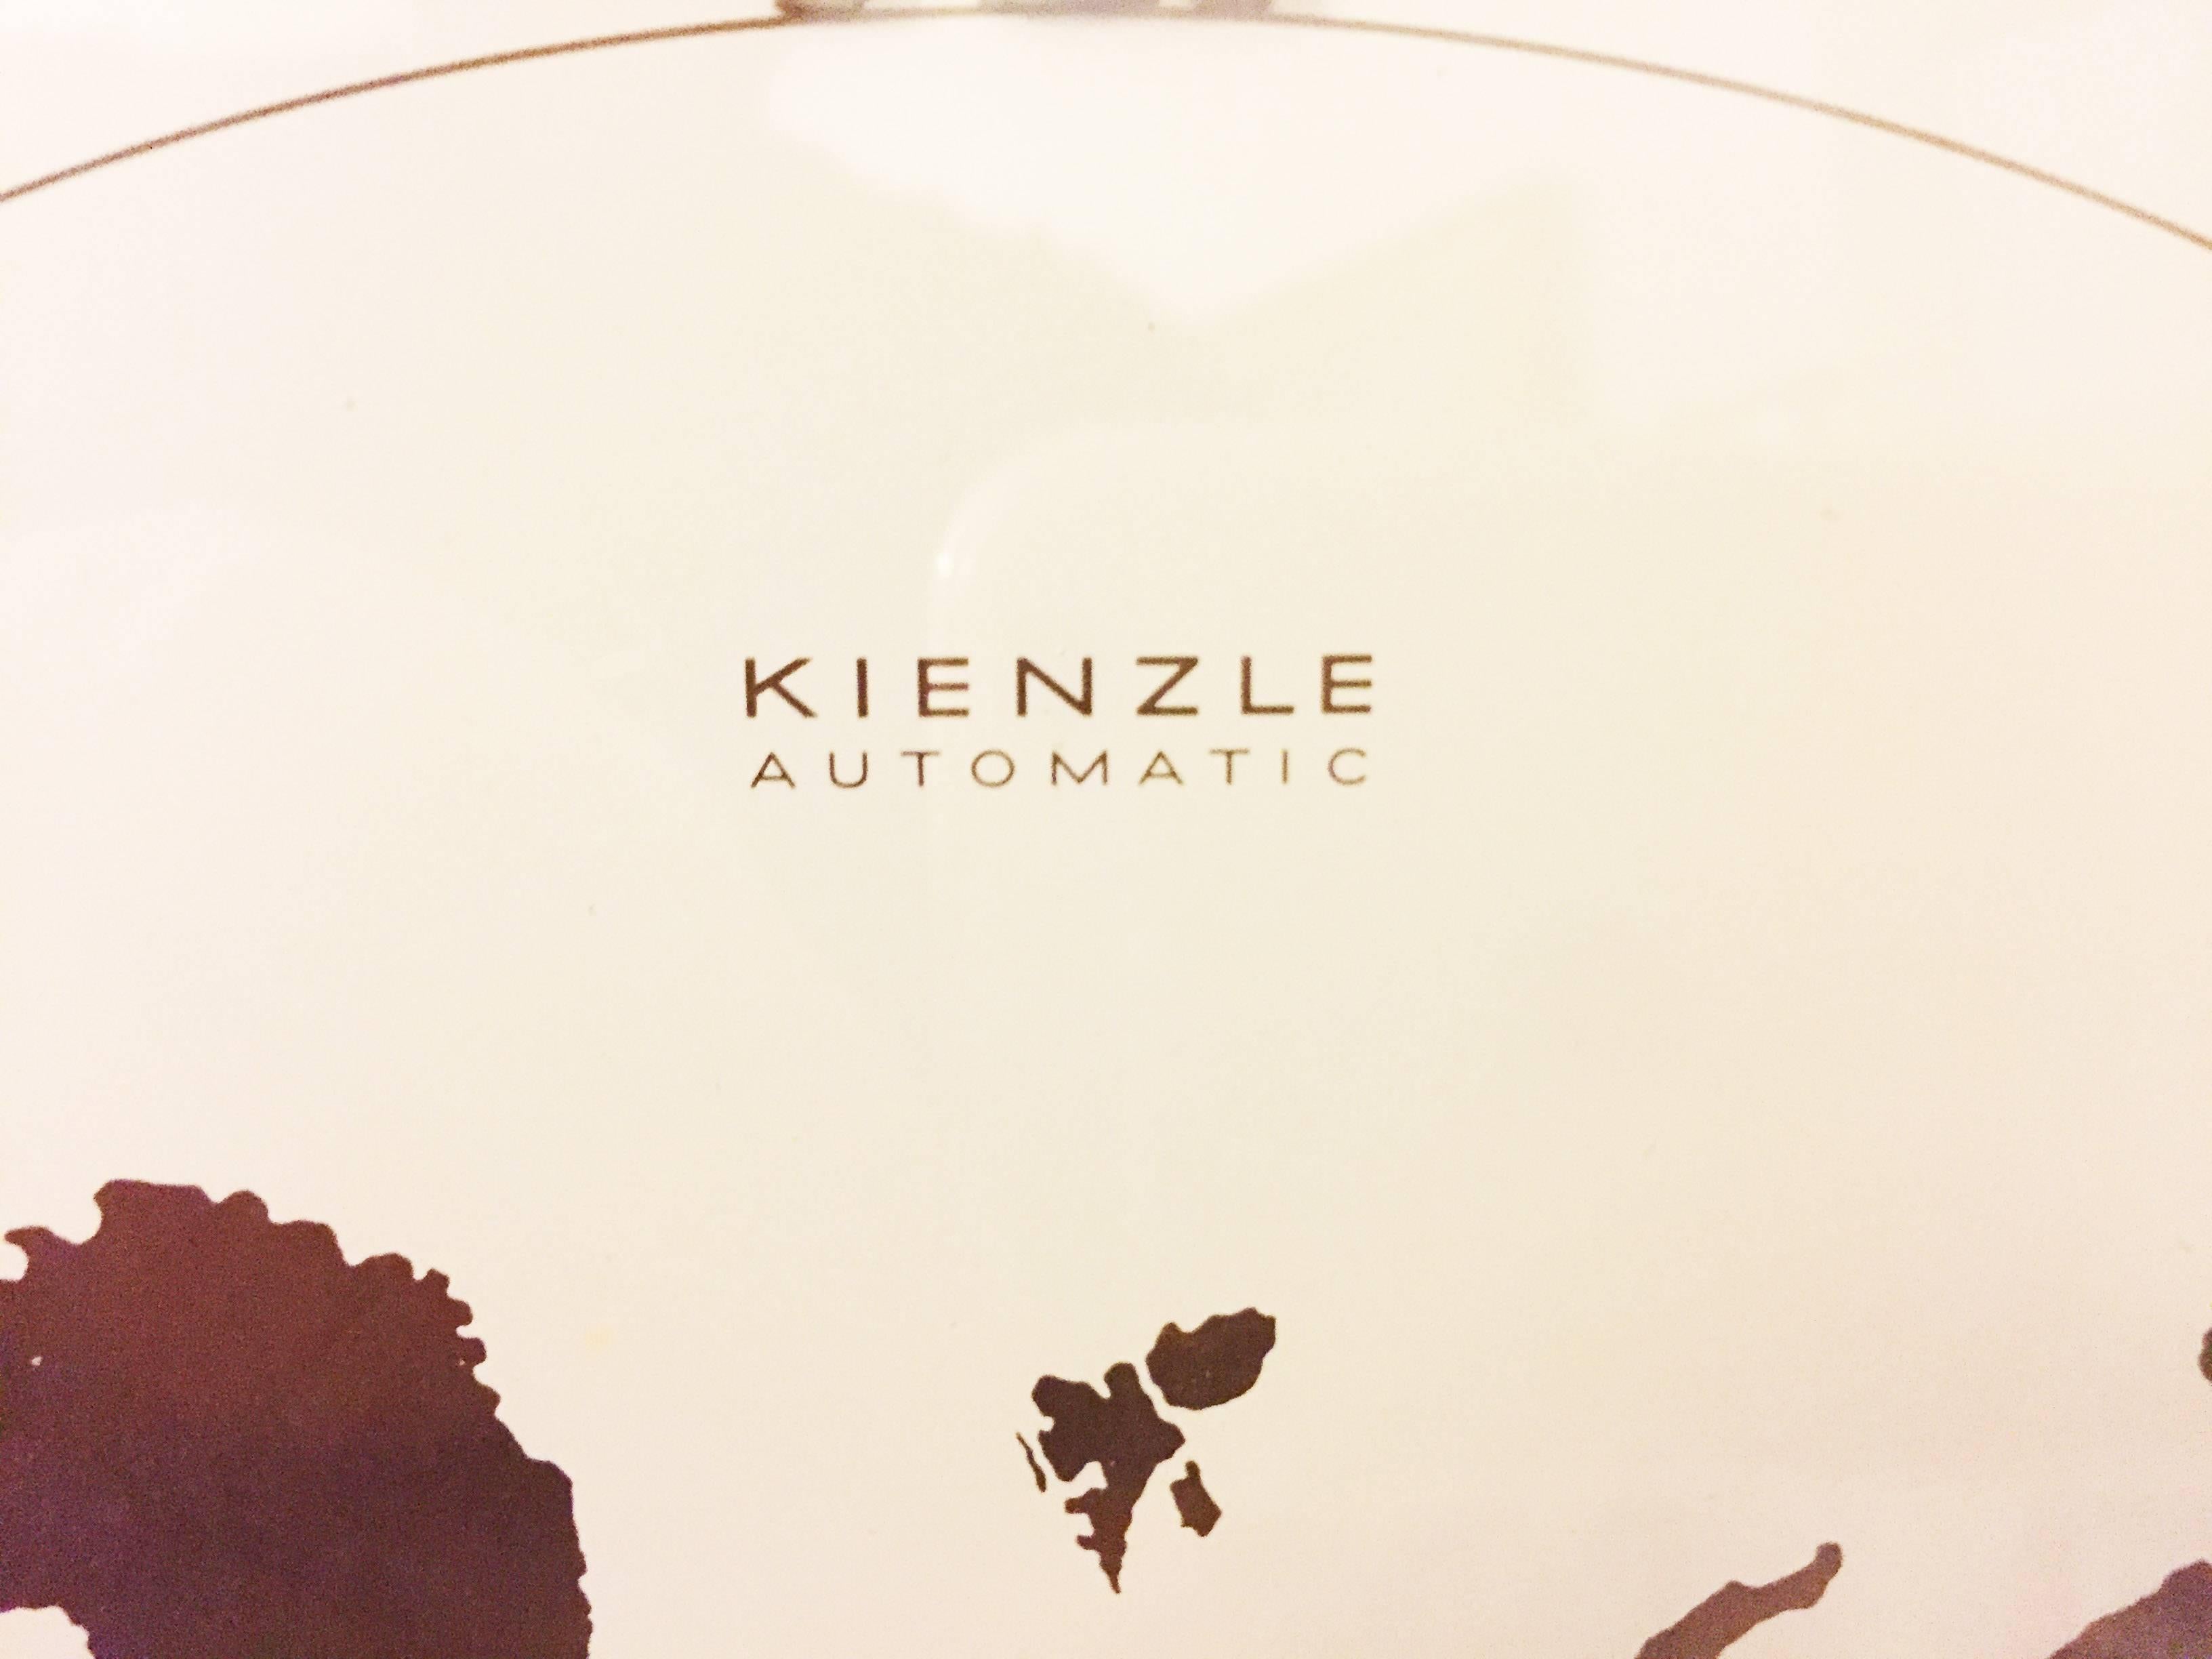 kienzle world time clock